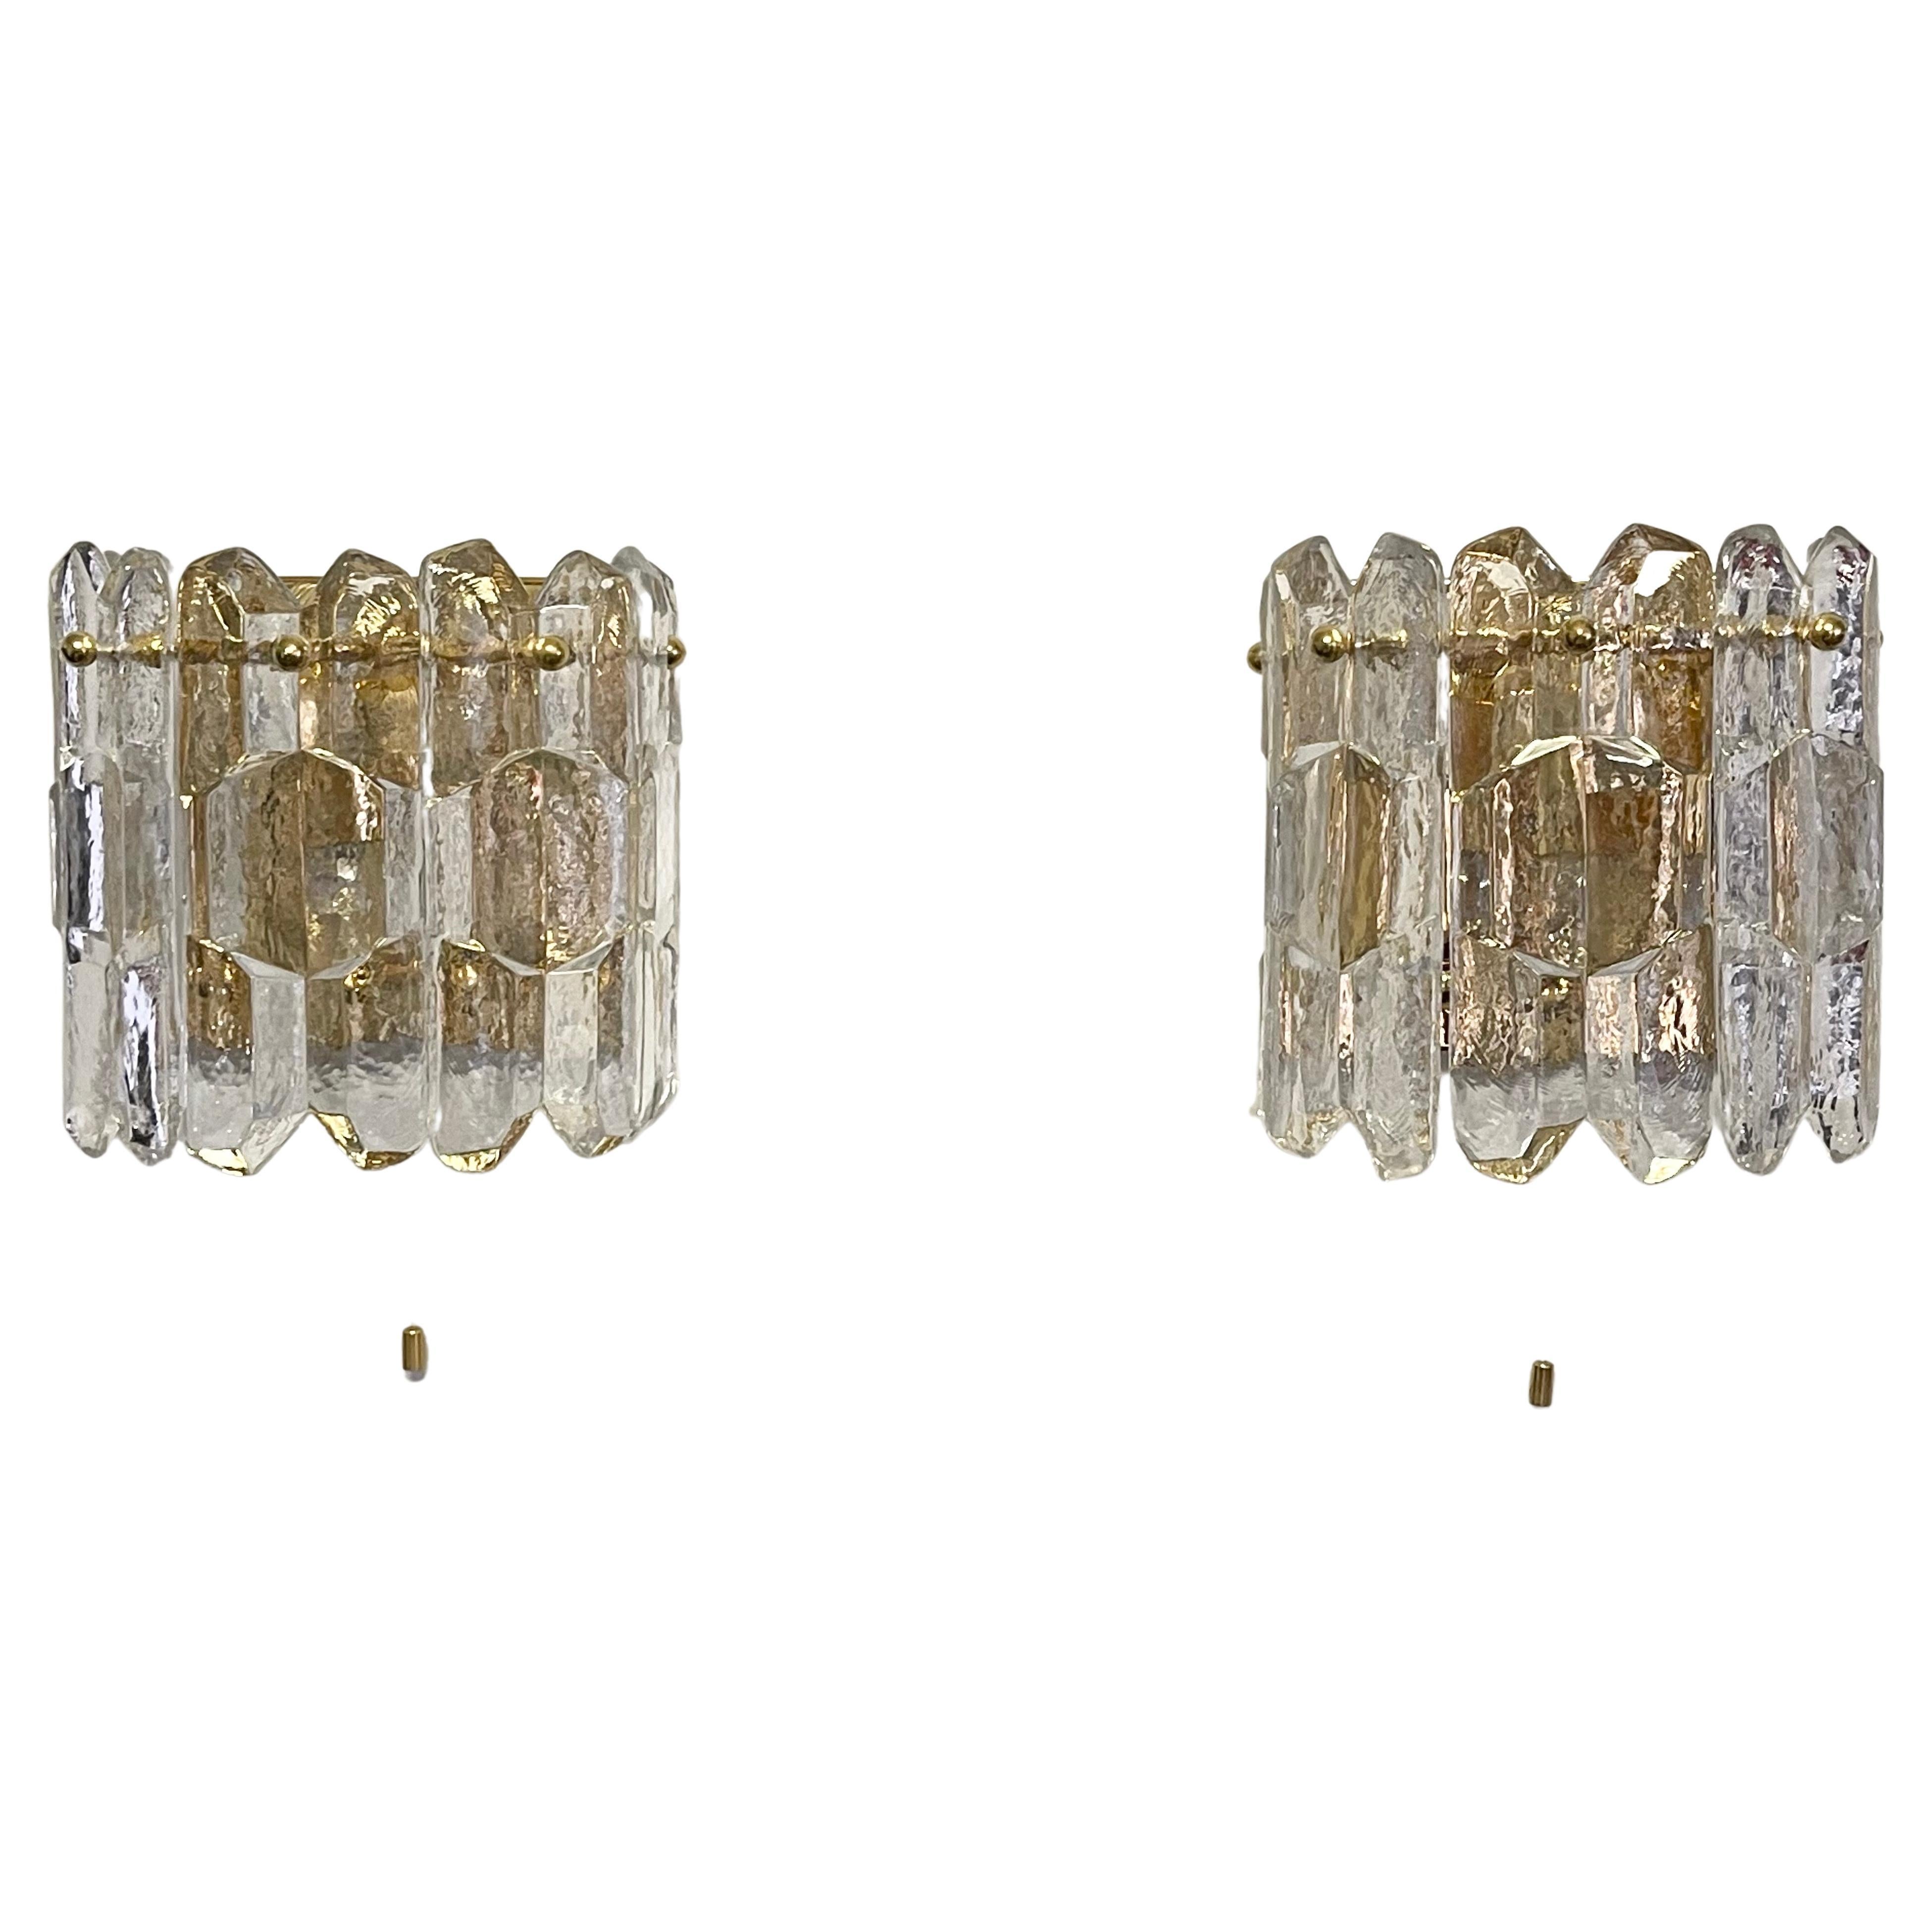 Pair of large gilt brass and Murano glass wall sconces by J.T. Kalmar, Austria, Vienna, 1960s.
Socket: Each 3 x e14 (for standard screw bulbs).
 